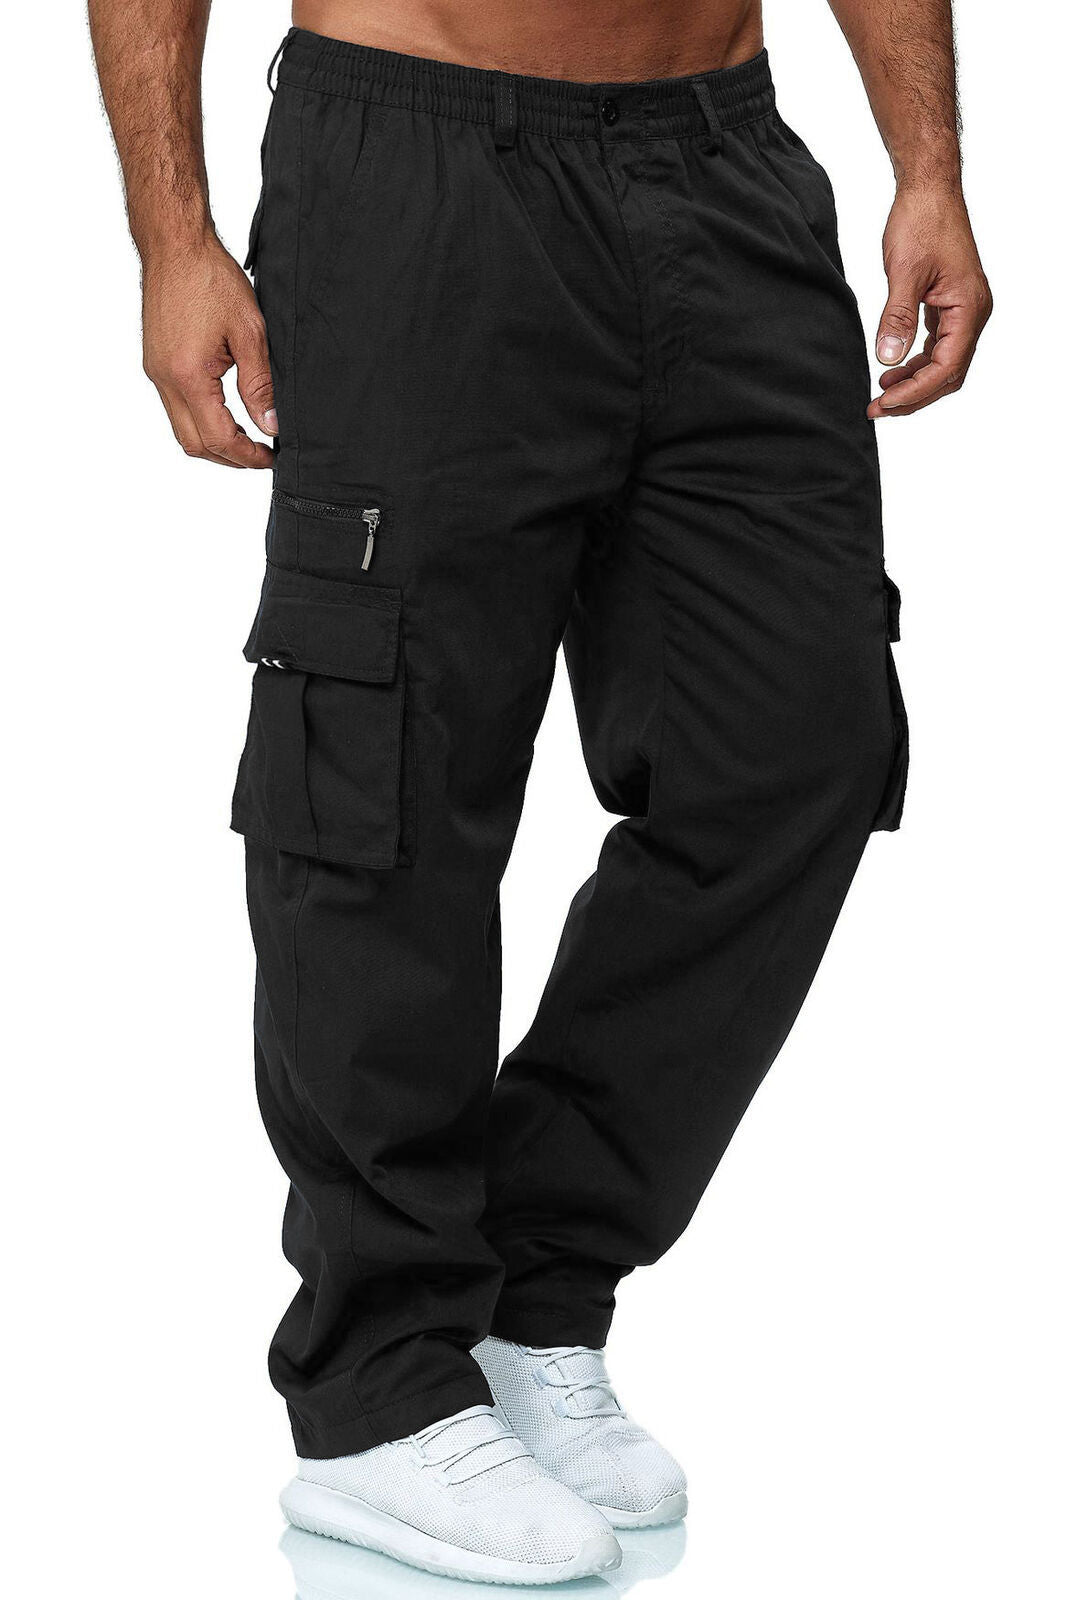 Casual Pockets Men's Outdoor Pants-Pants-Black-S-Free Shipping at meselling99